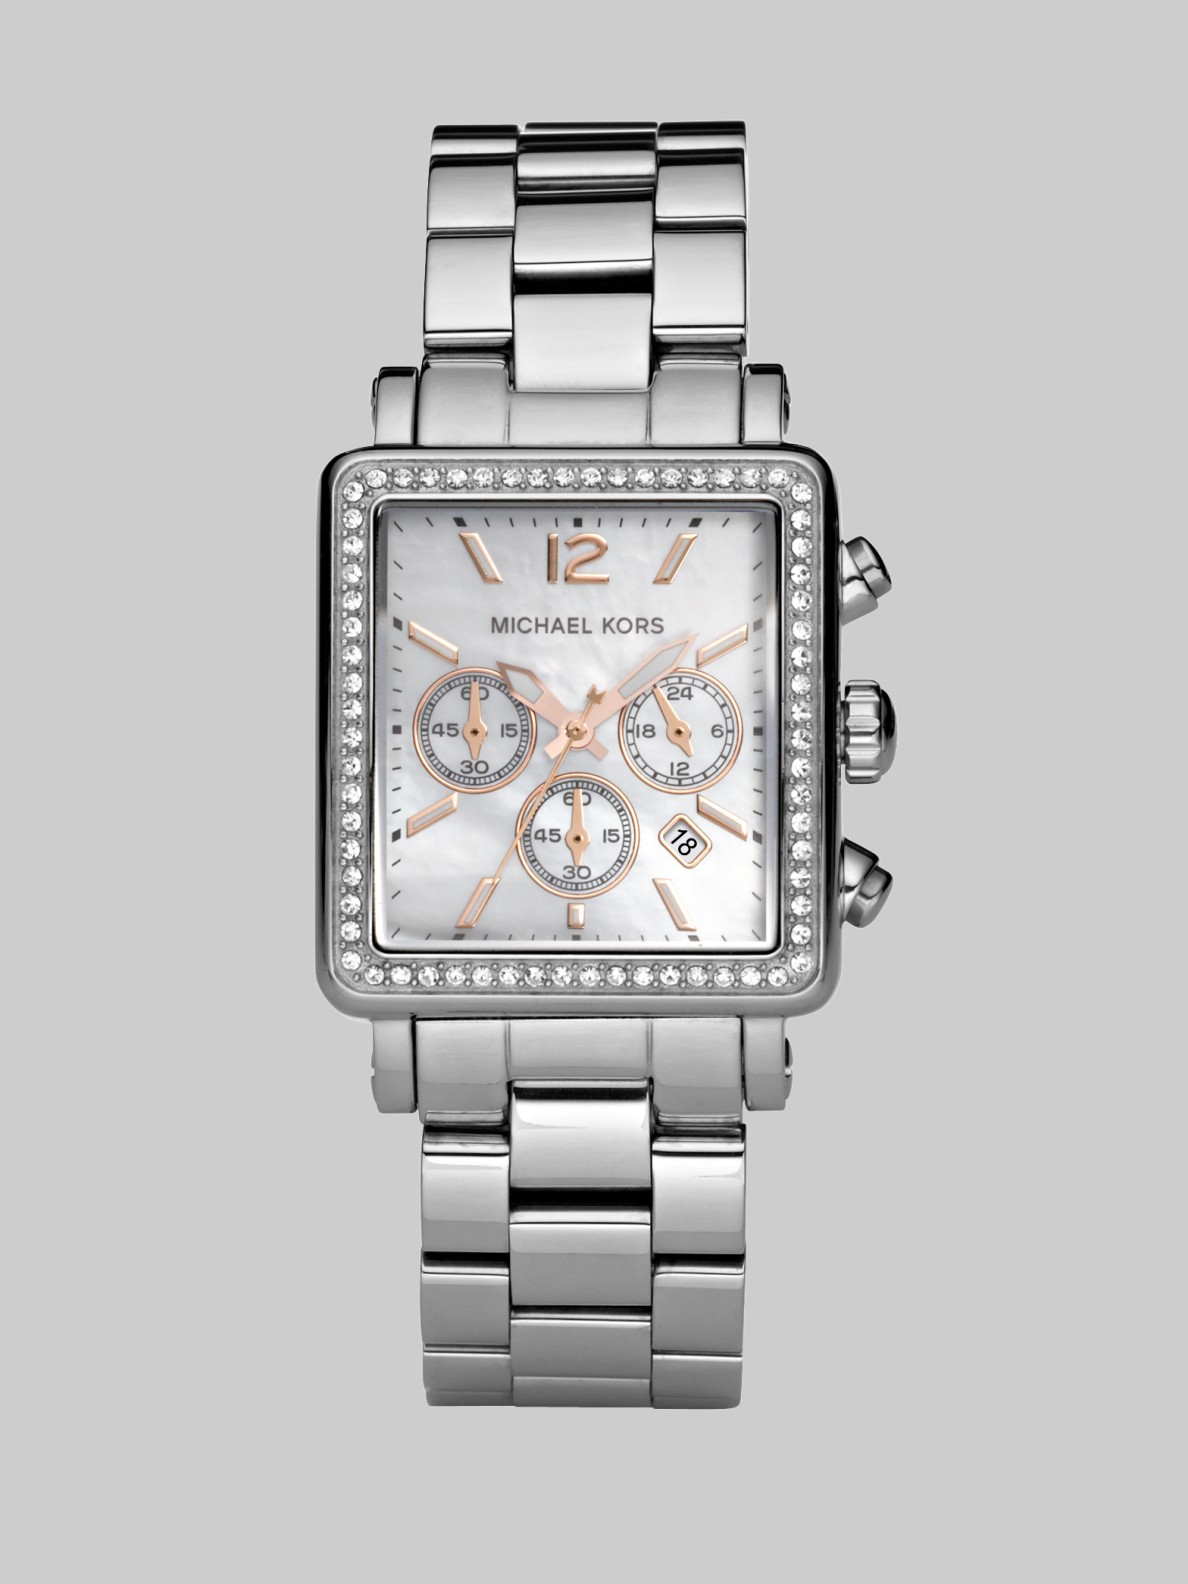 MICHAEL KORS ladies wristwatch 39 mm chronograph bracelet stainless steel  MK5354  plentyShop LTS